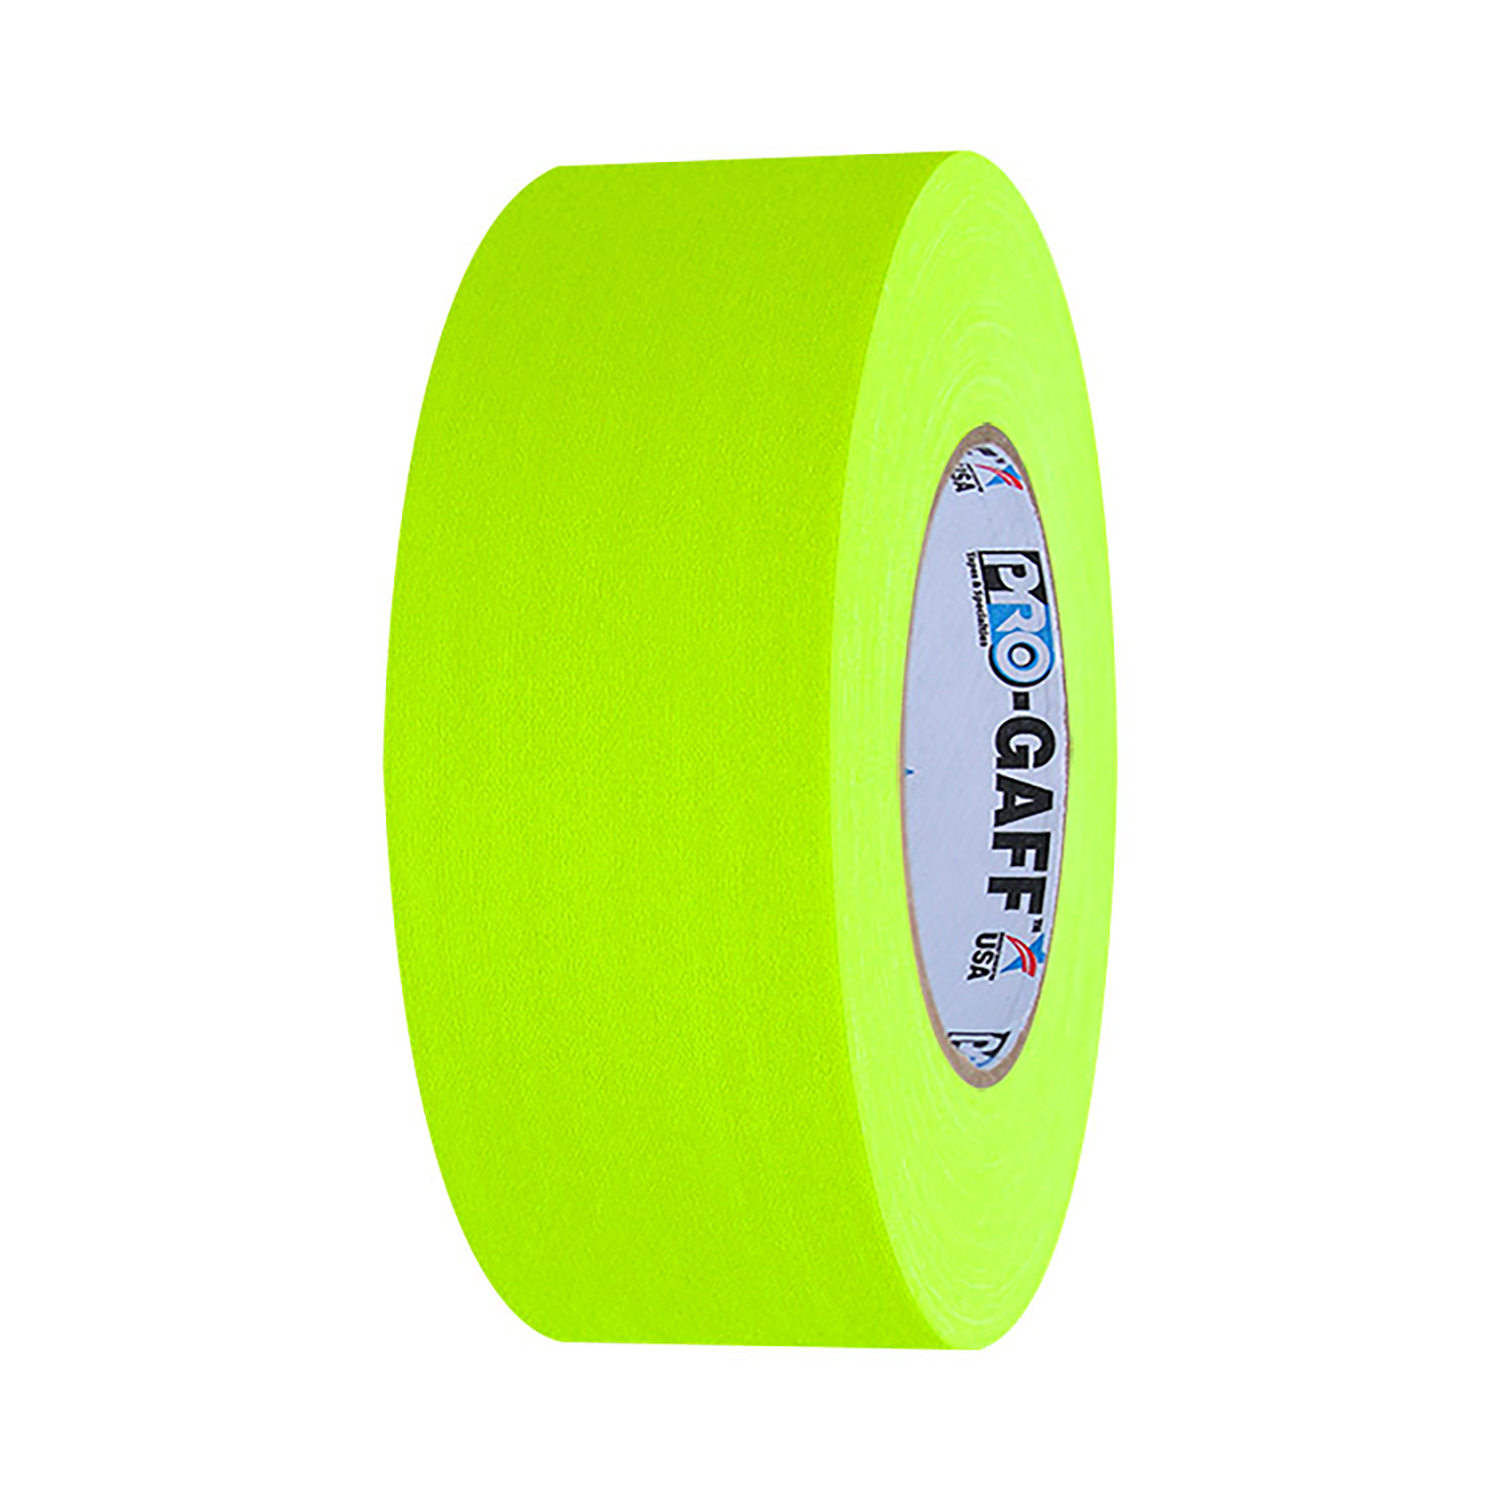 Pro Gaff Tape Cloth - Fluorescent Yellow - 50 Yards - 2"